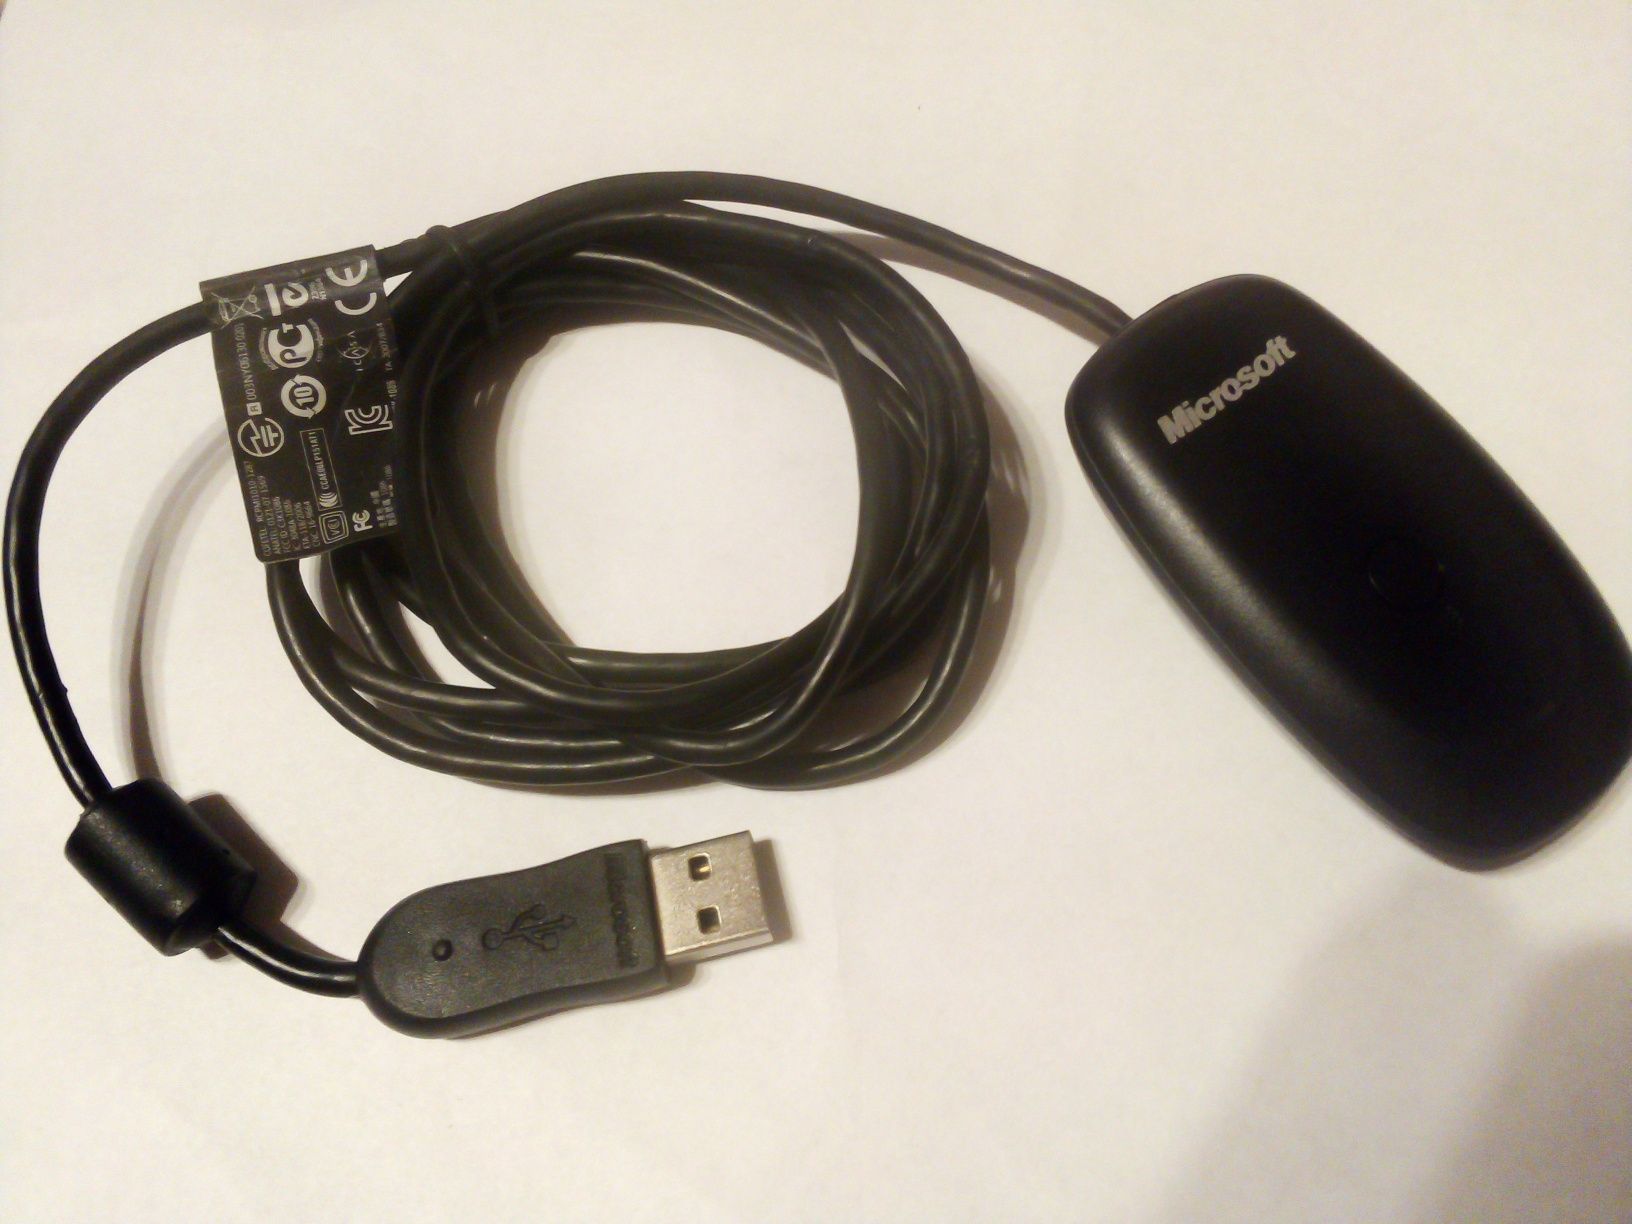 Adapter pc odbiornik PC modem Microsoft oryginalny do pada Xbox 360